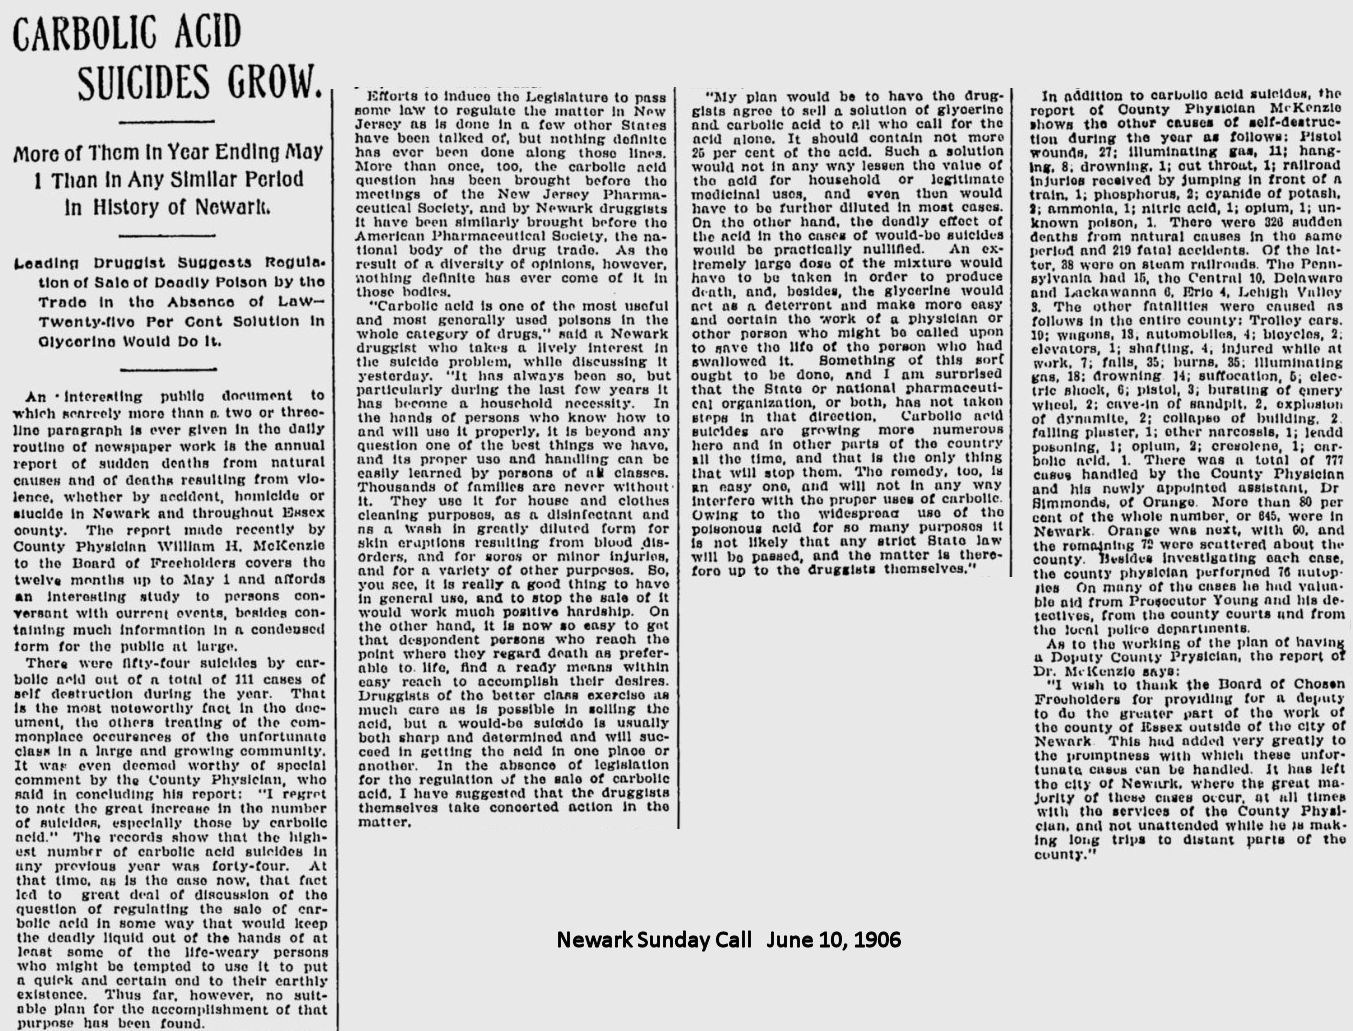 Carbolic Acid Suicides Grow
June 10. 1906
